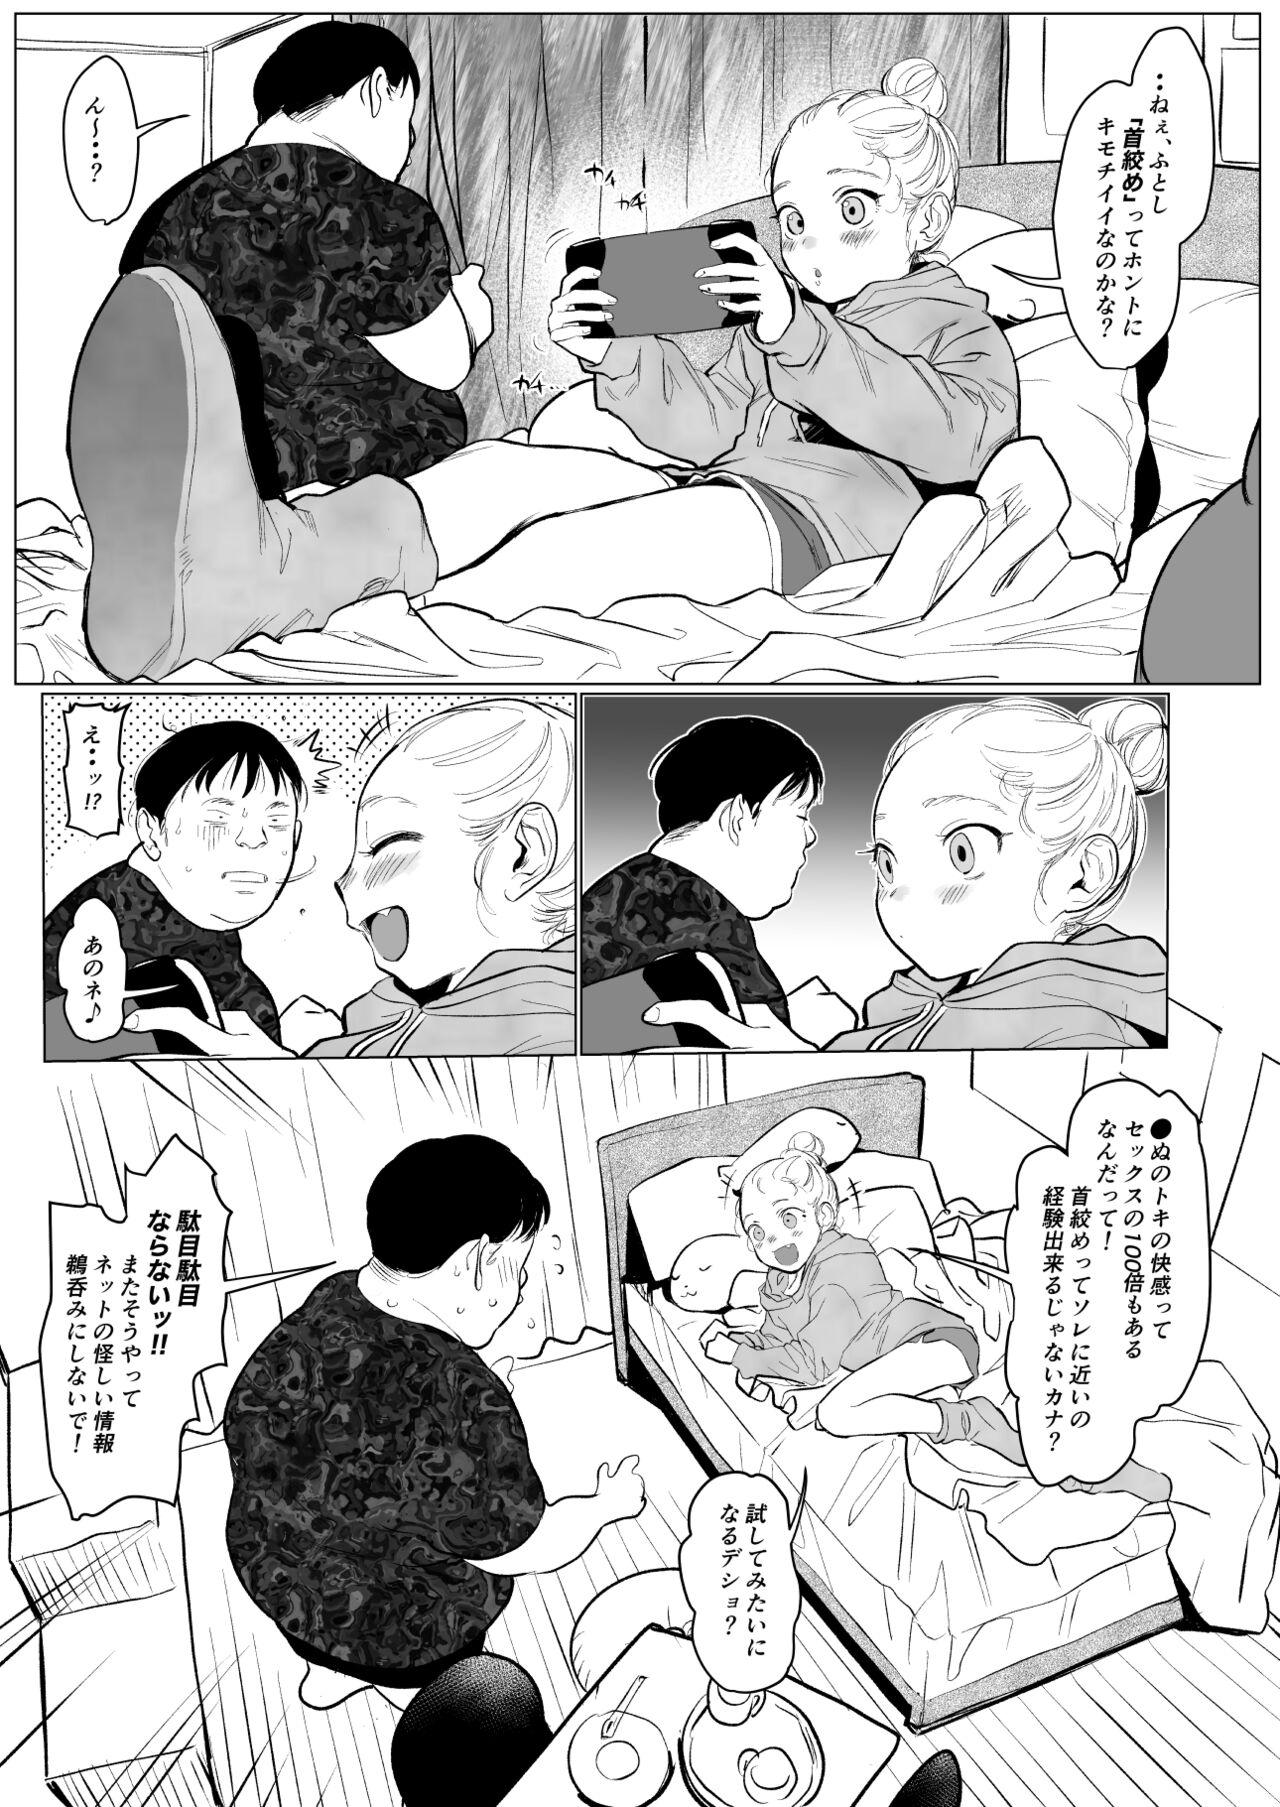 Hoe Kubishimesha-chan. - Original Sharing - Page 1